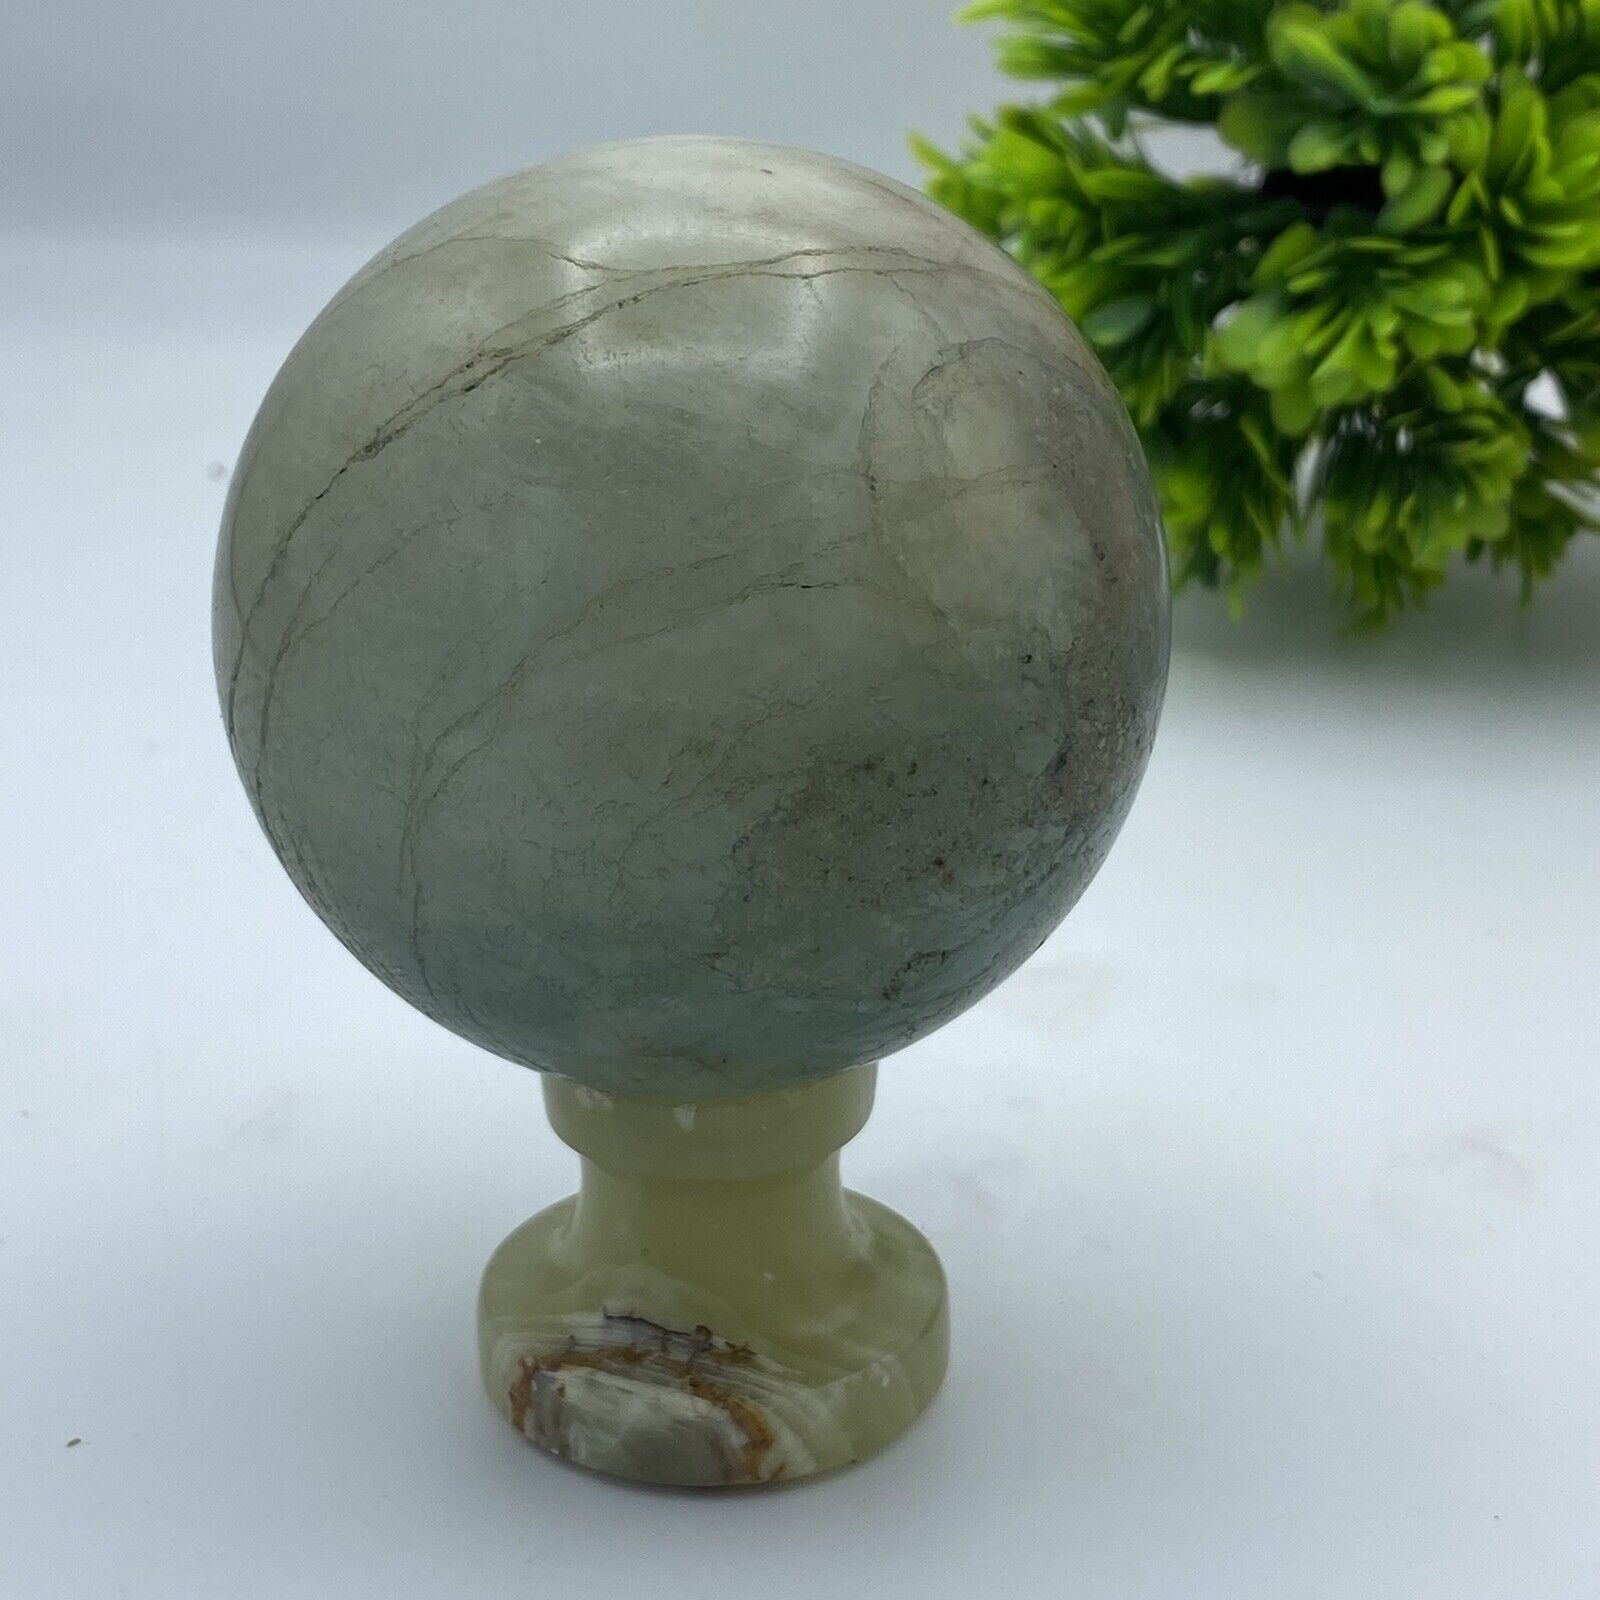 485-gram Aquamarine Sphere Healing Crystal Natural Stone Ball Reiki Mineral